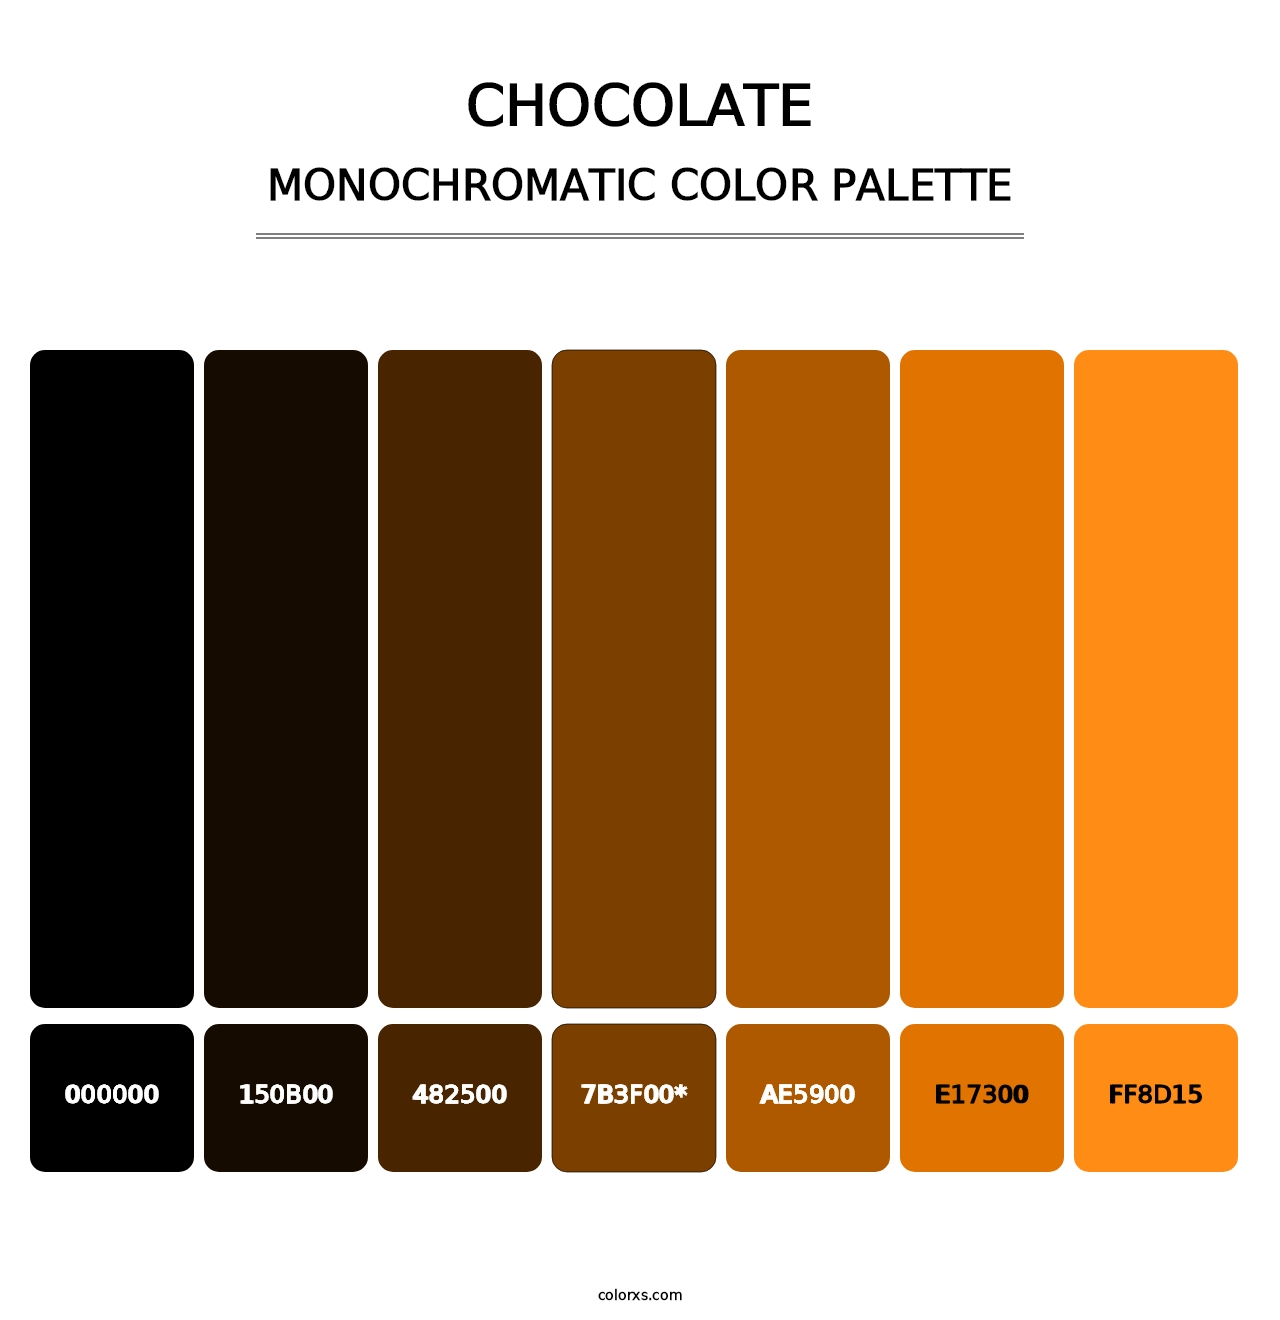 Chocolate - Monochromatic Color Palette